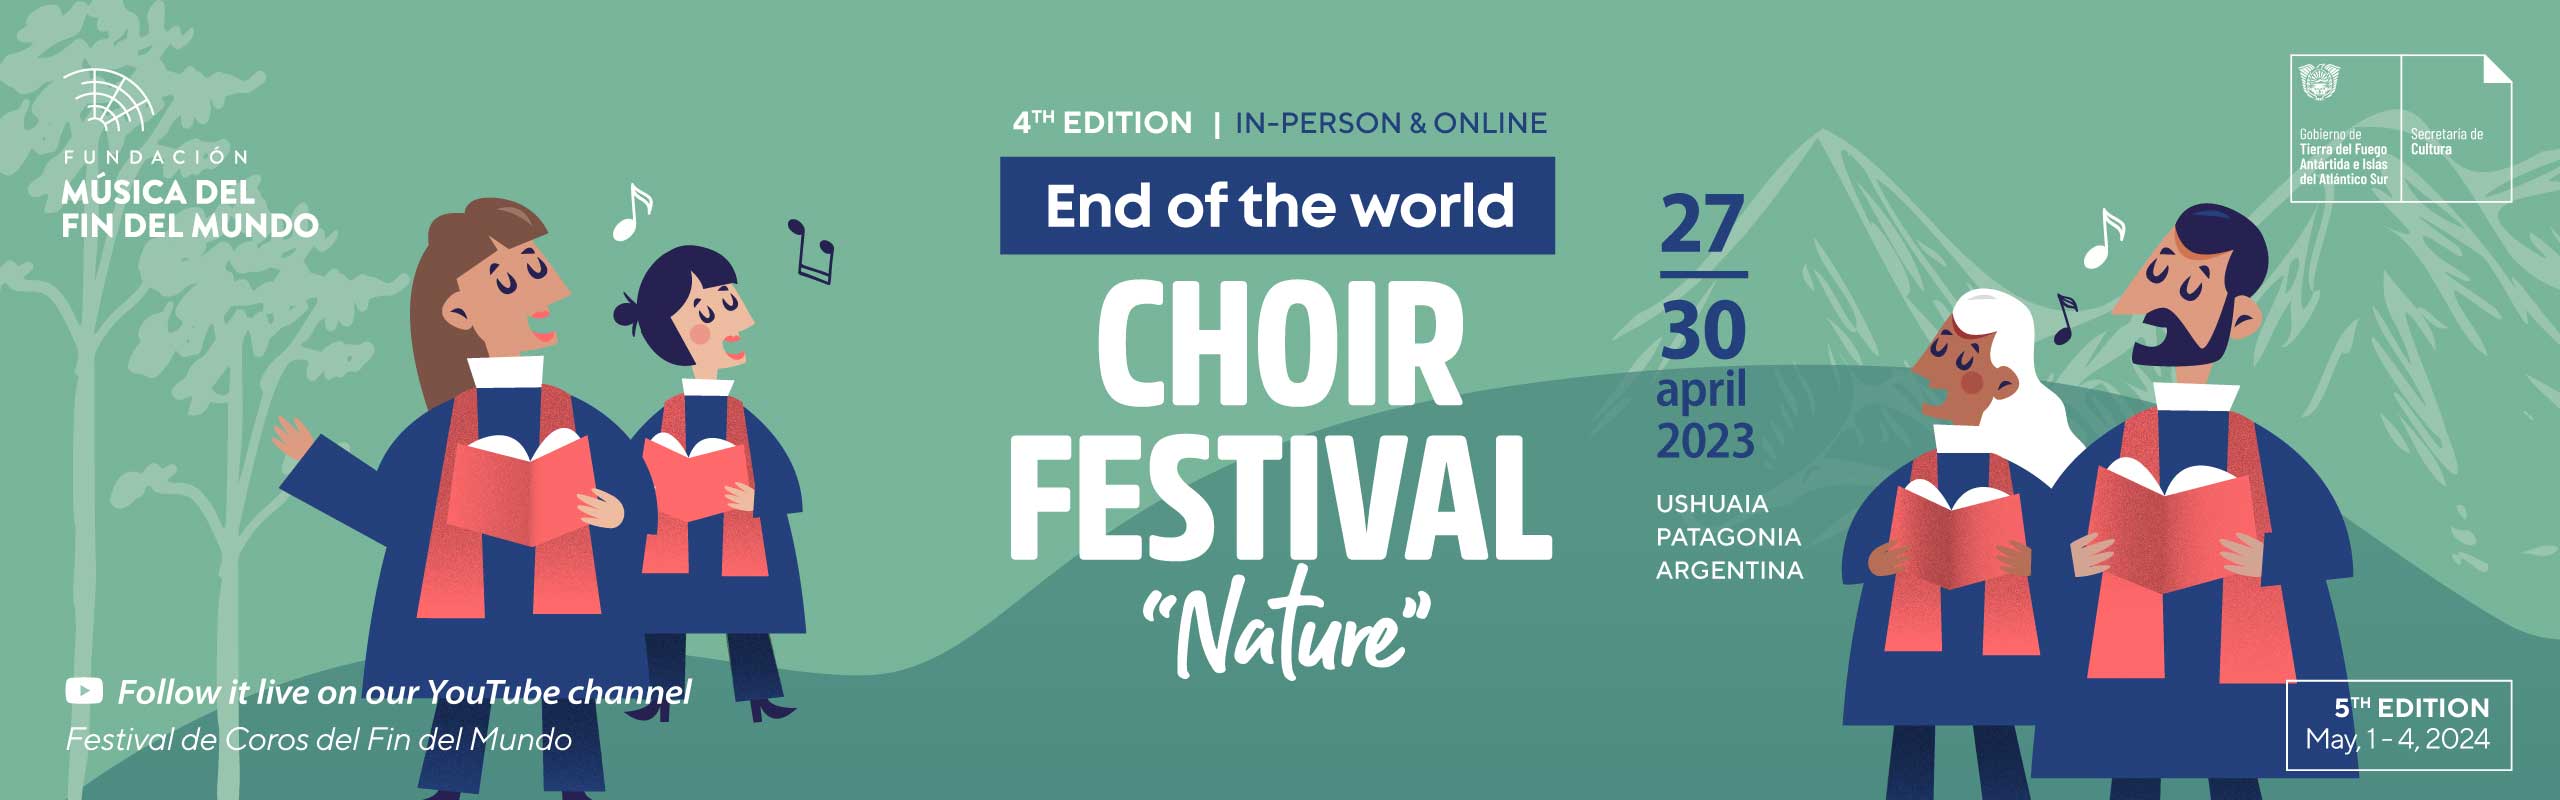 Env of the world choir festival 2023